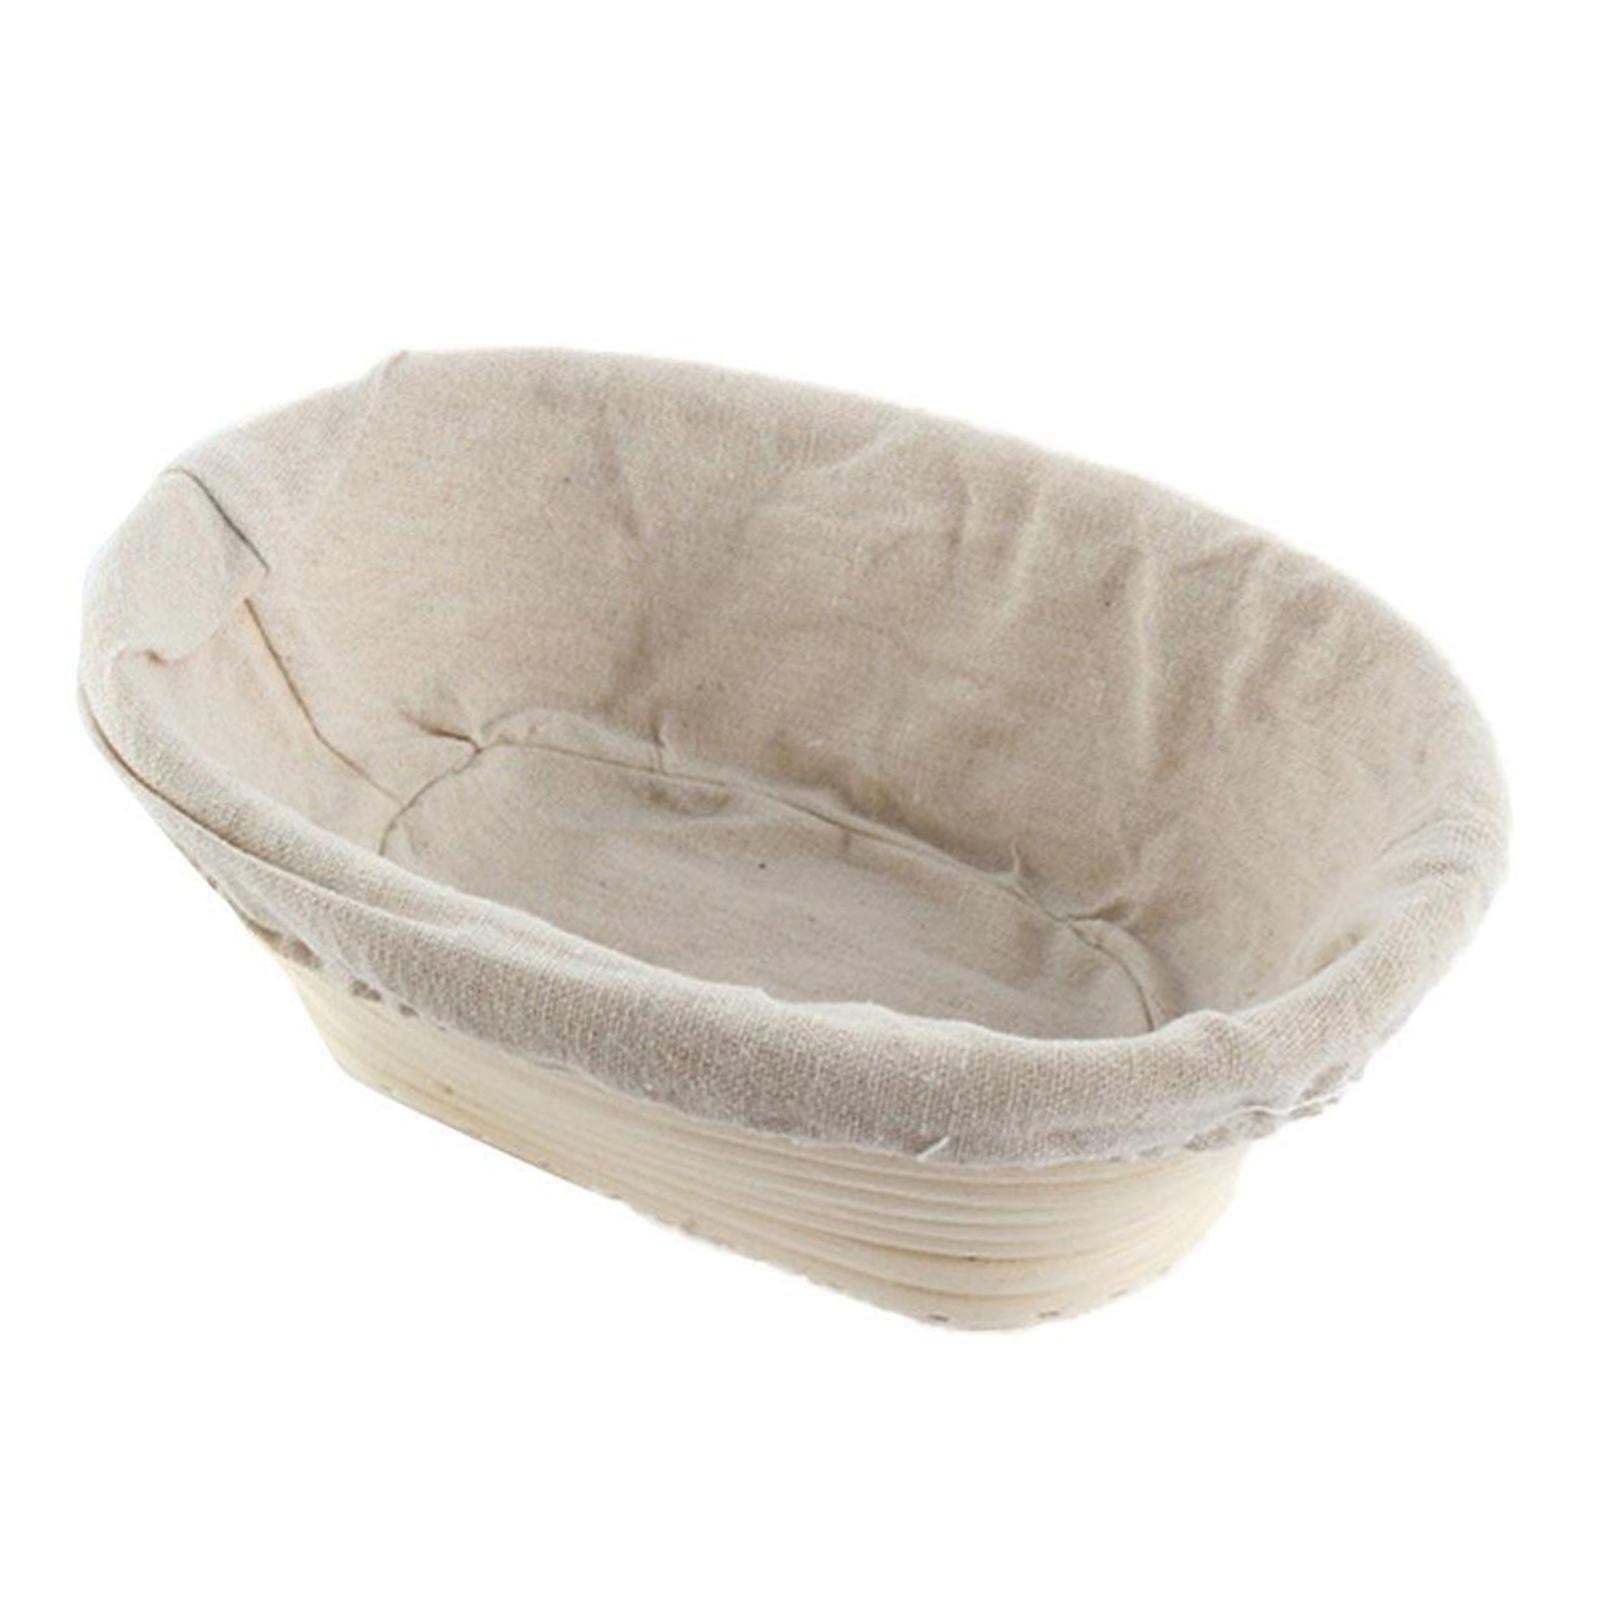 Details about   Natural Rattan Round Oval Bread Basket Storage Mold Eco friendly Baking Kitchen 